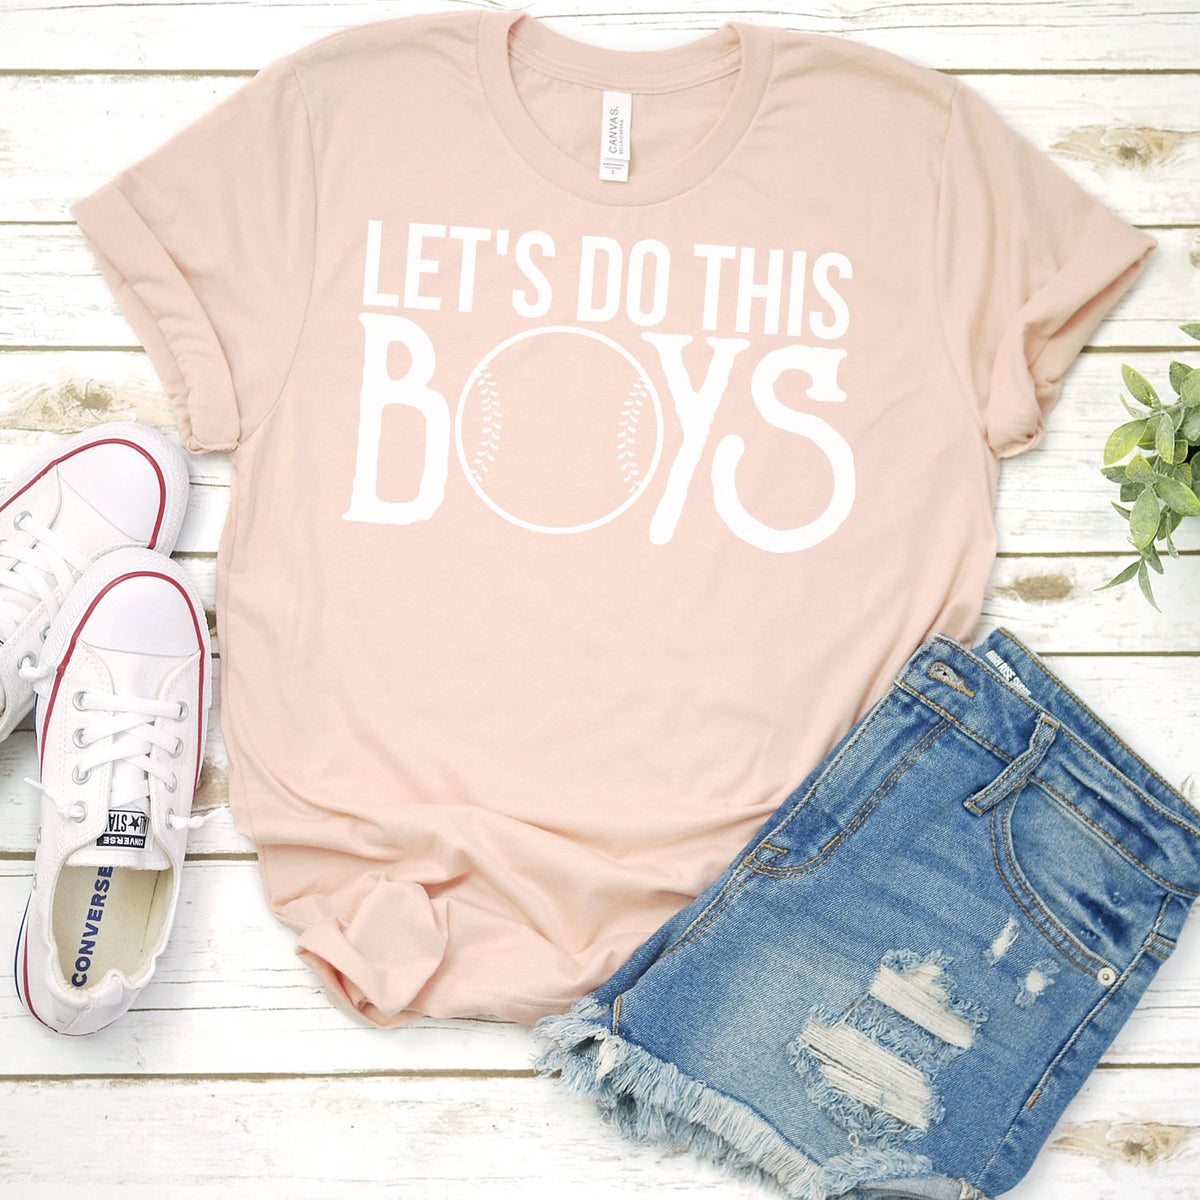 Lets Do This Boys - Short Sleeve Tee Shirt